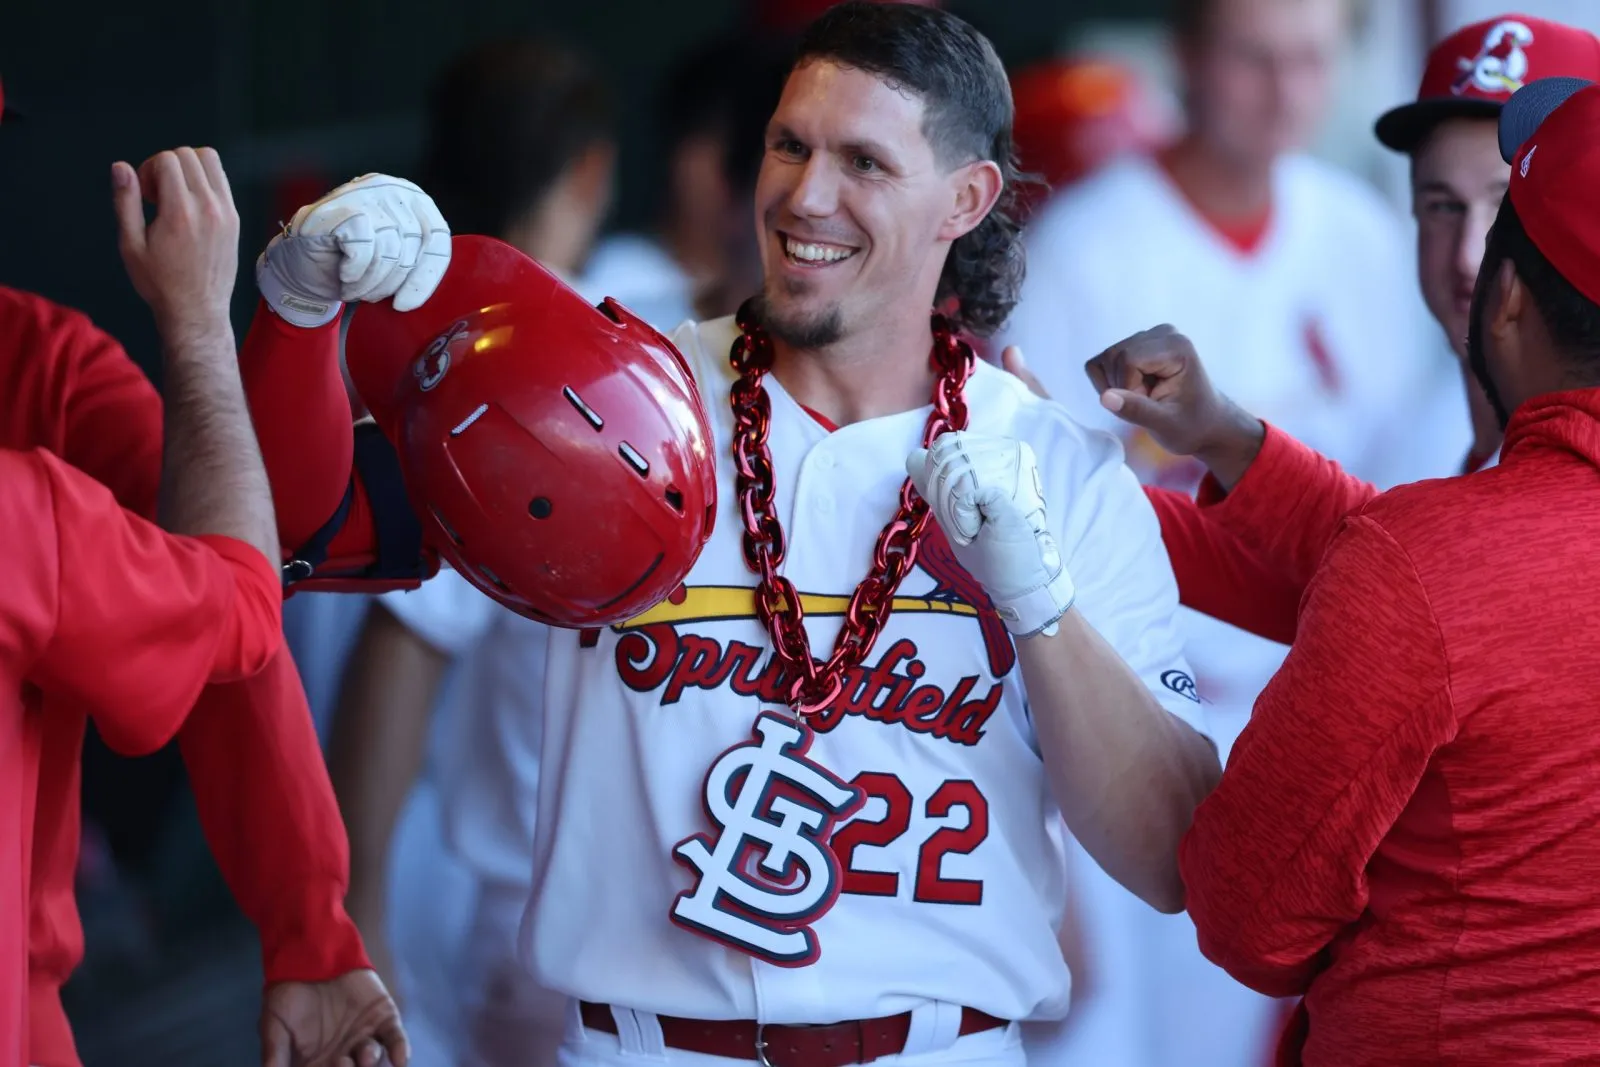 A baseball player in a Springfield Cardinals uniform celebrates after hitting a home run